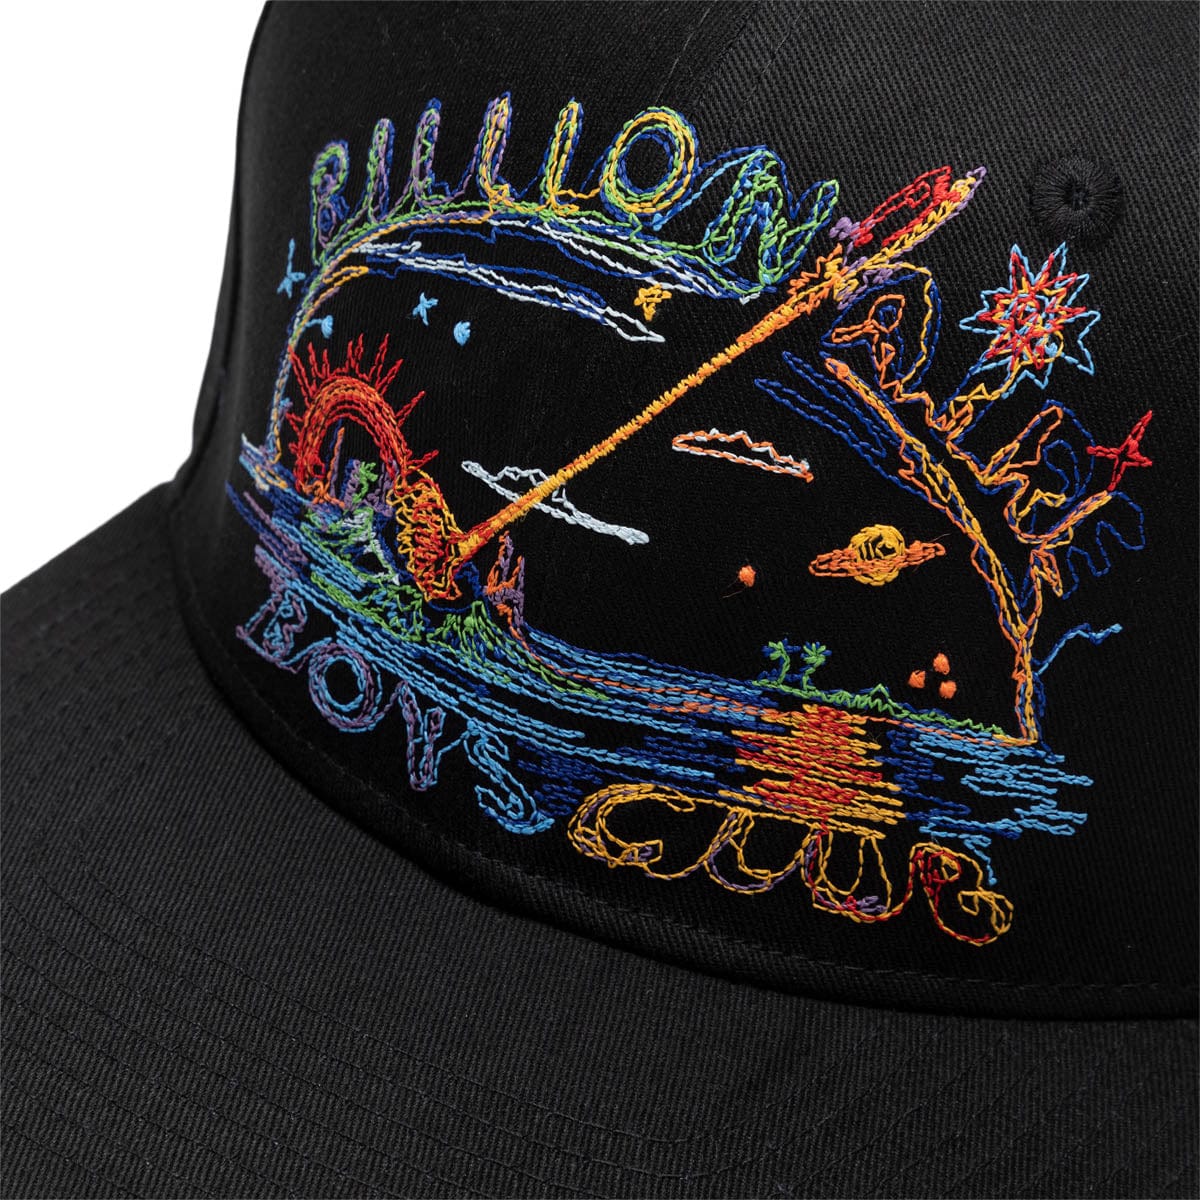 Billionaire Boys Club Headwear BLACK / O/S STARS SNAPBACK HAT